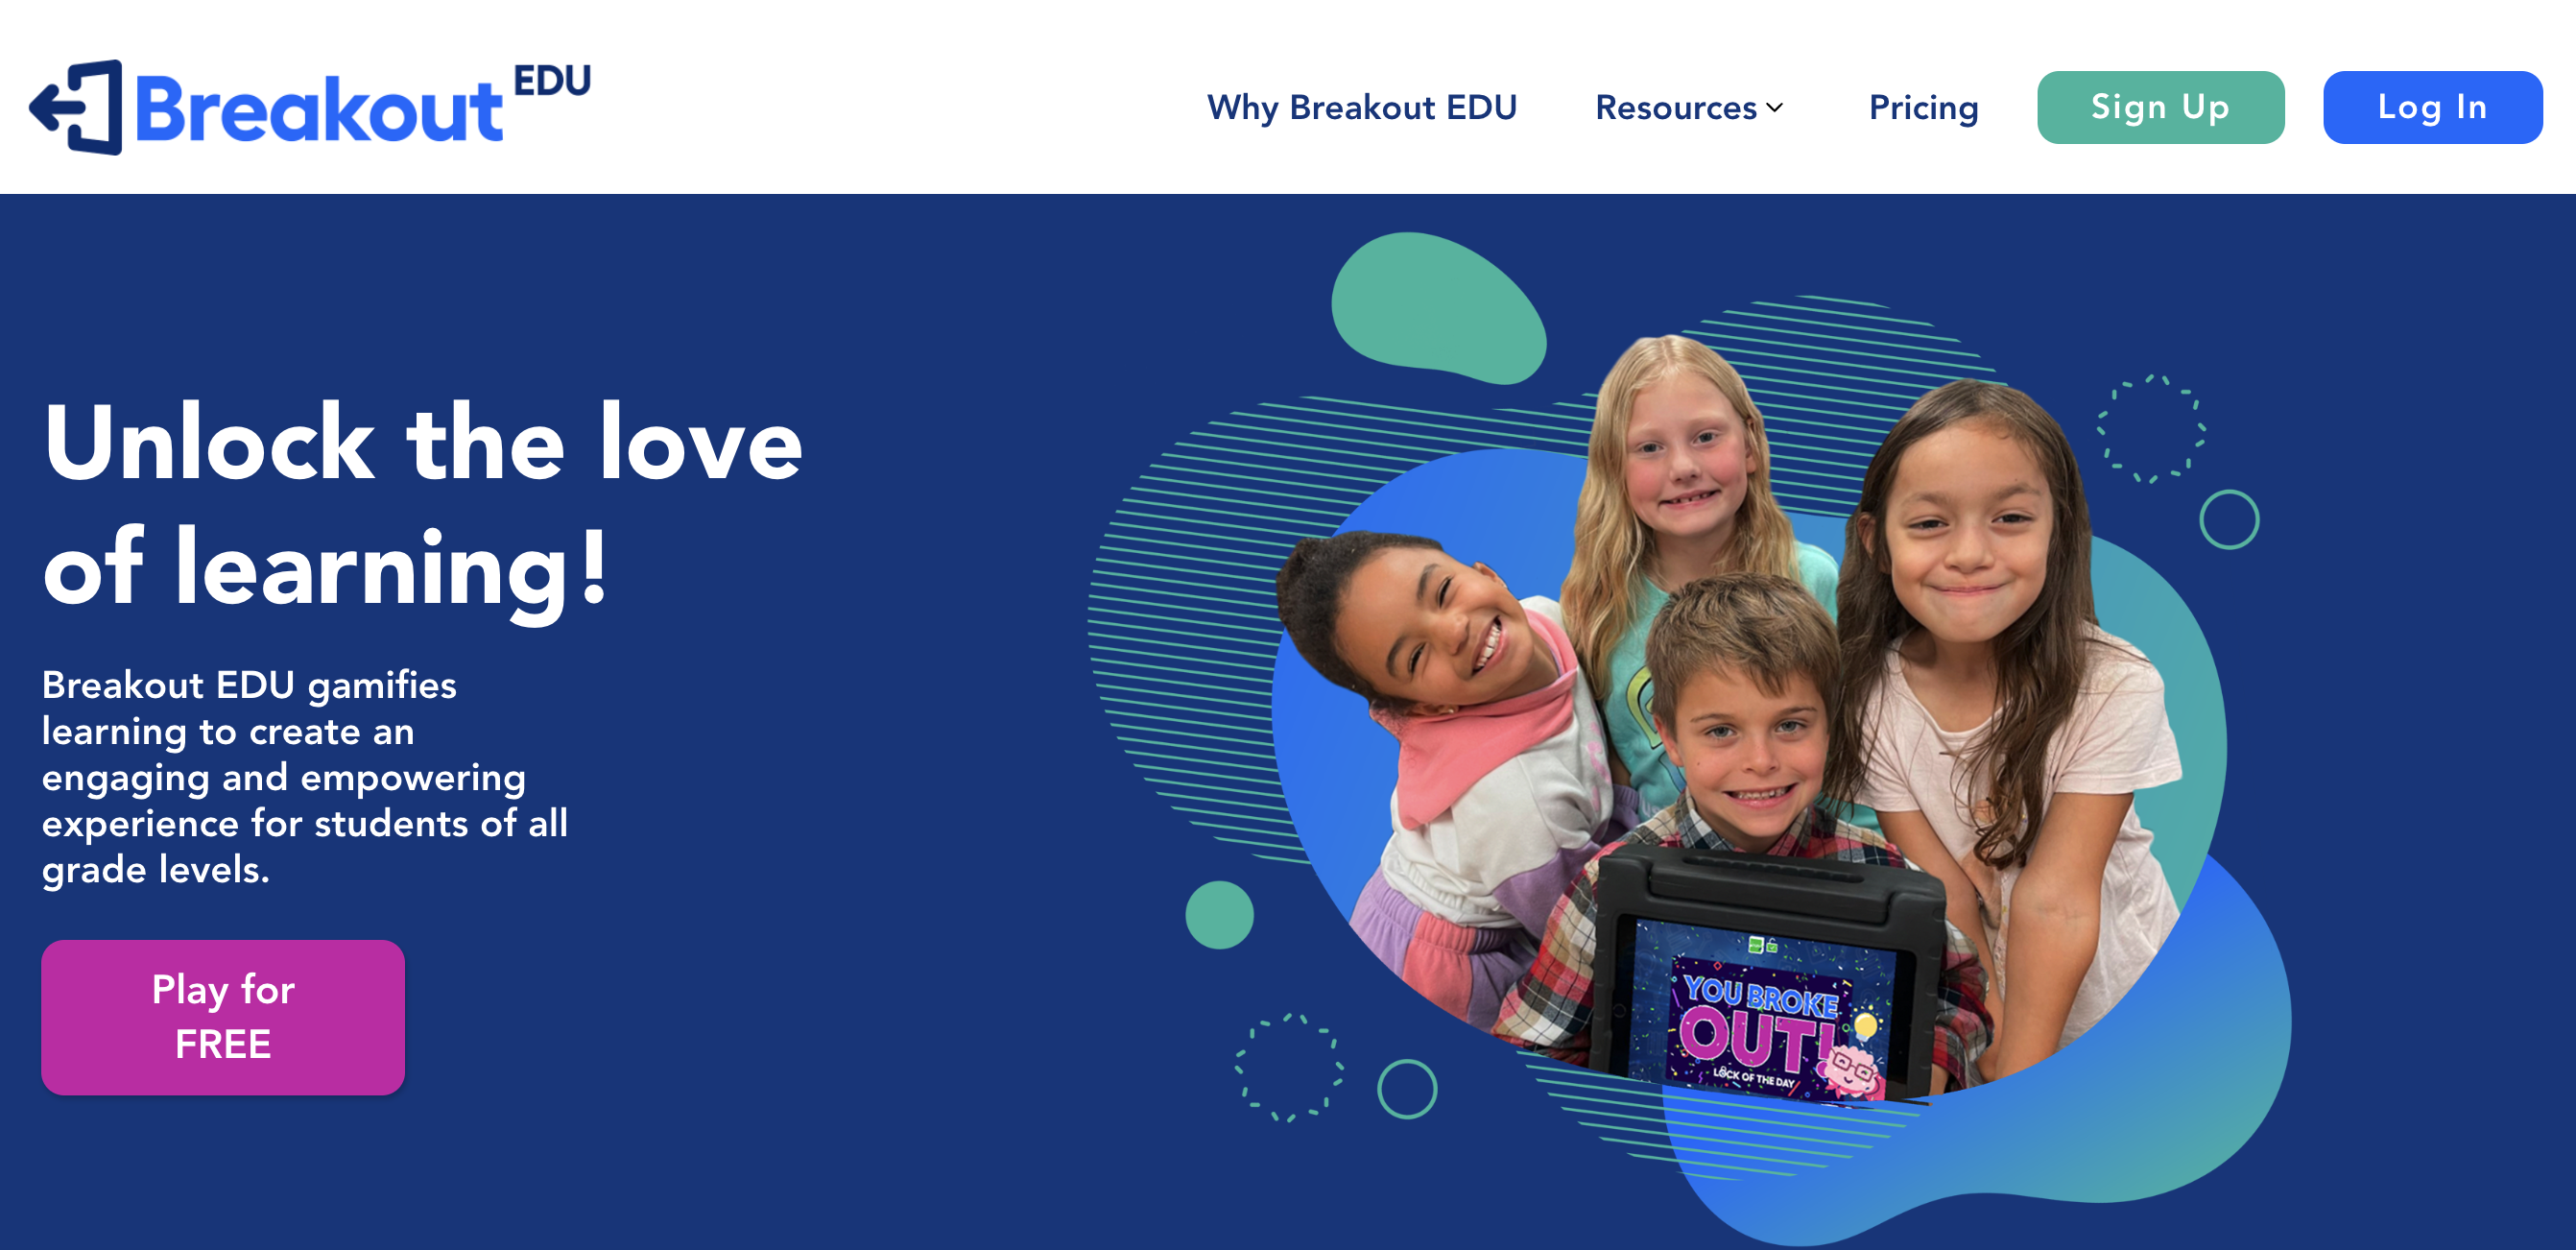 Breakout EDU screenshot from their homepage